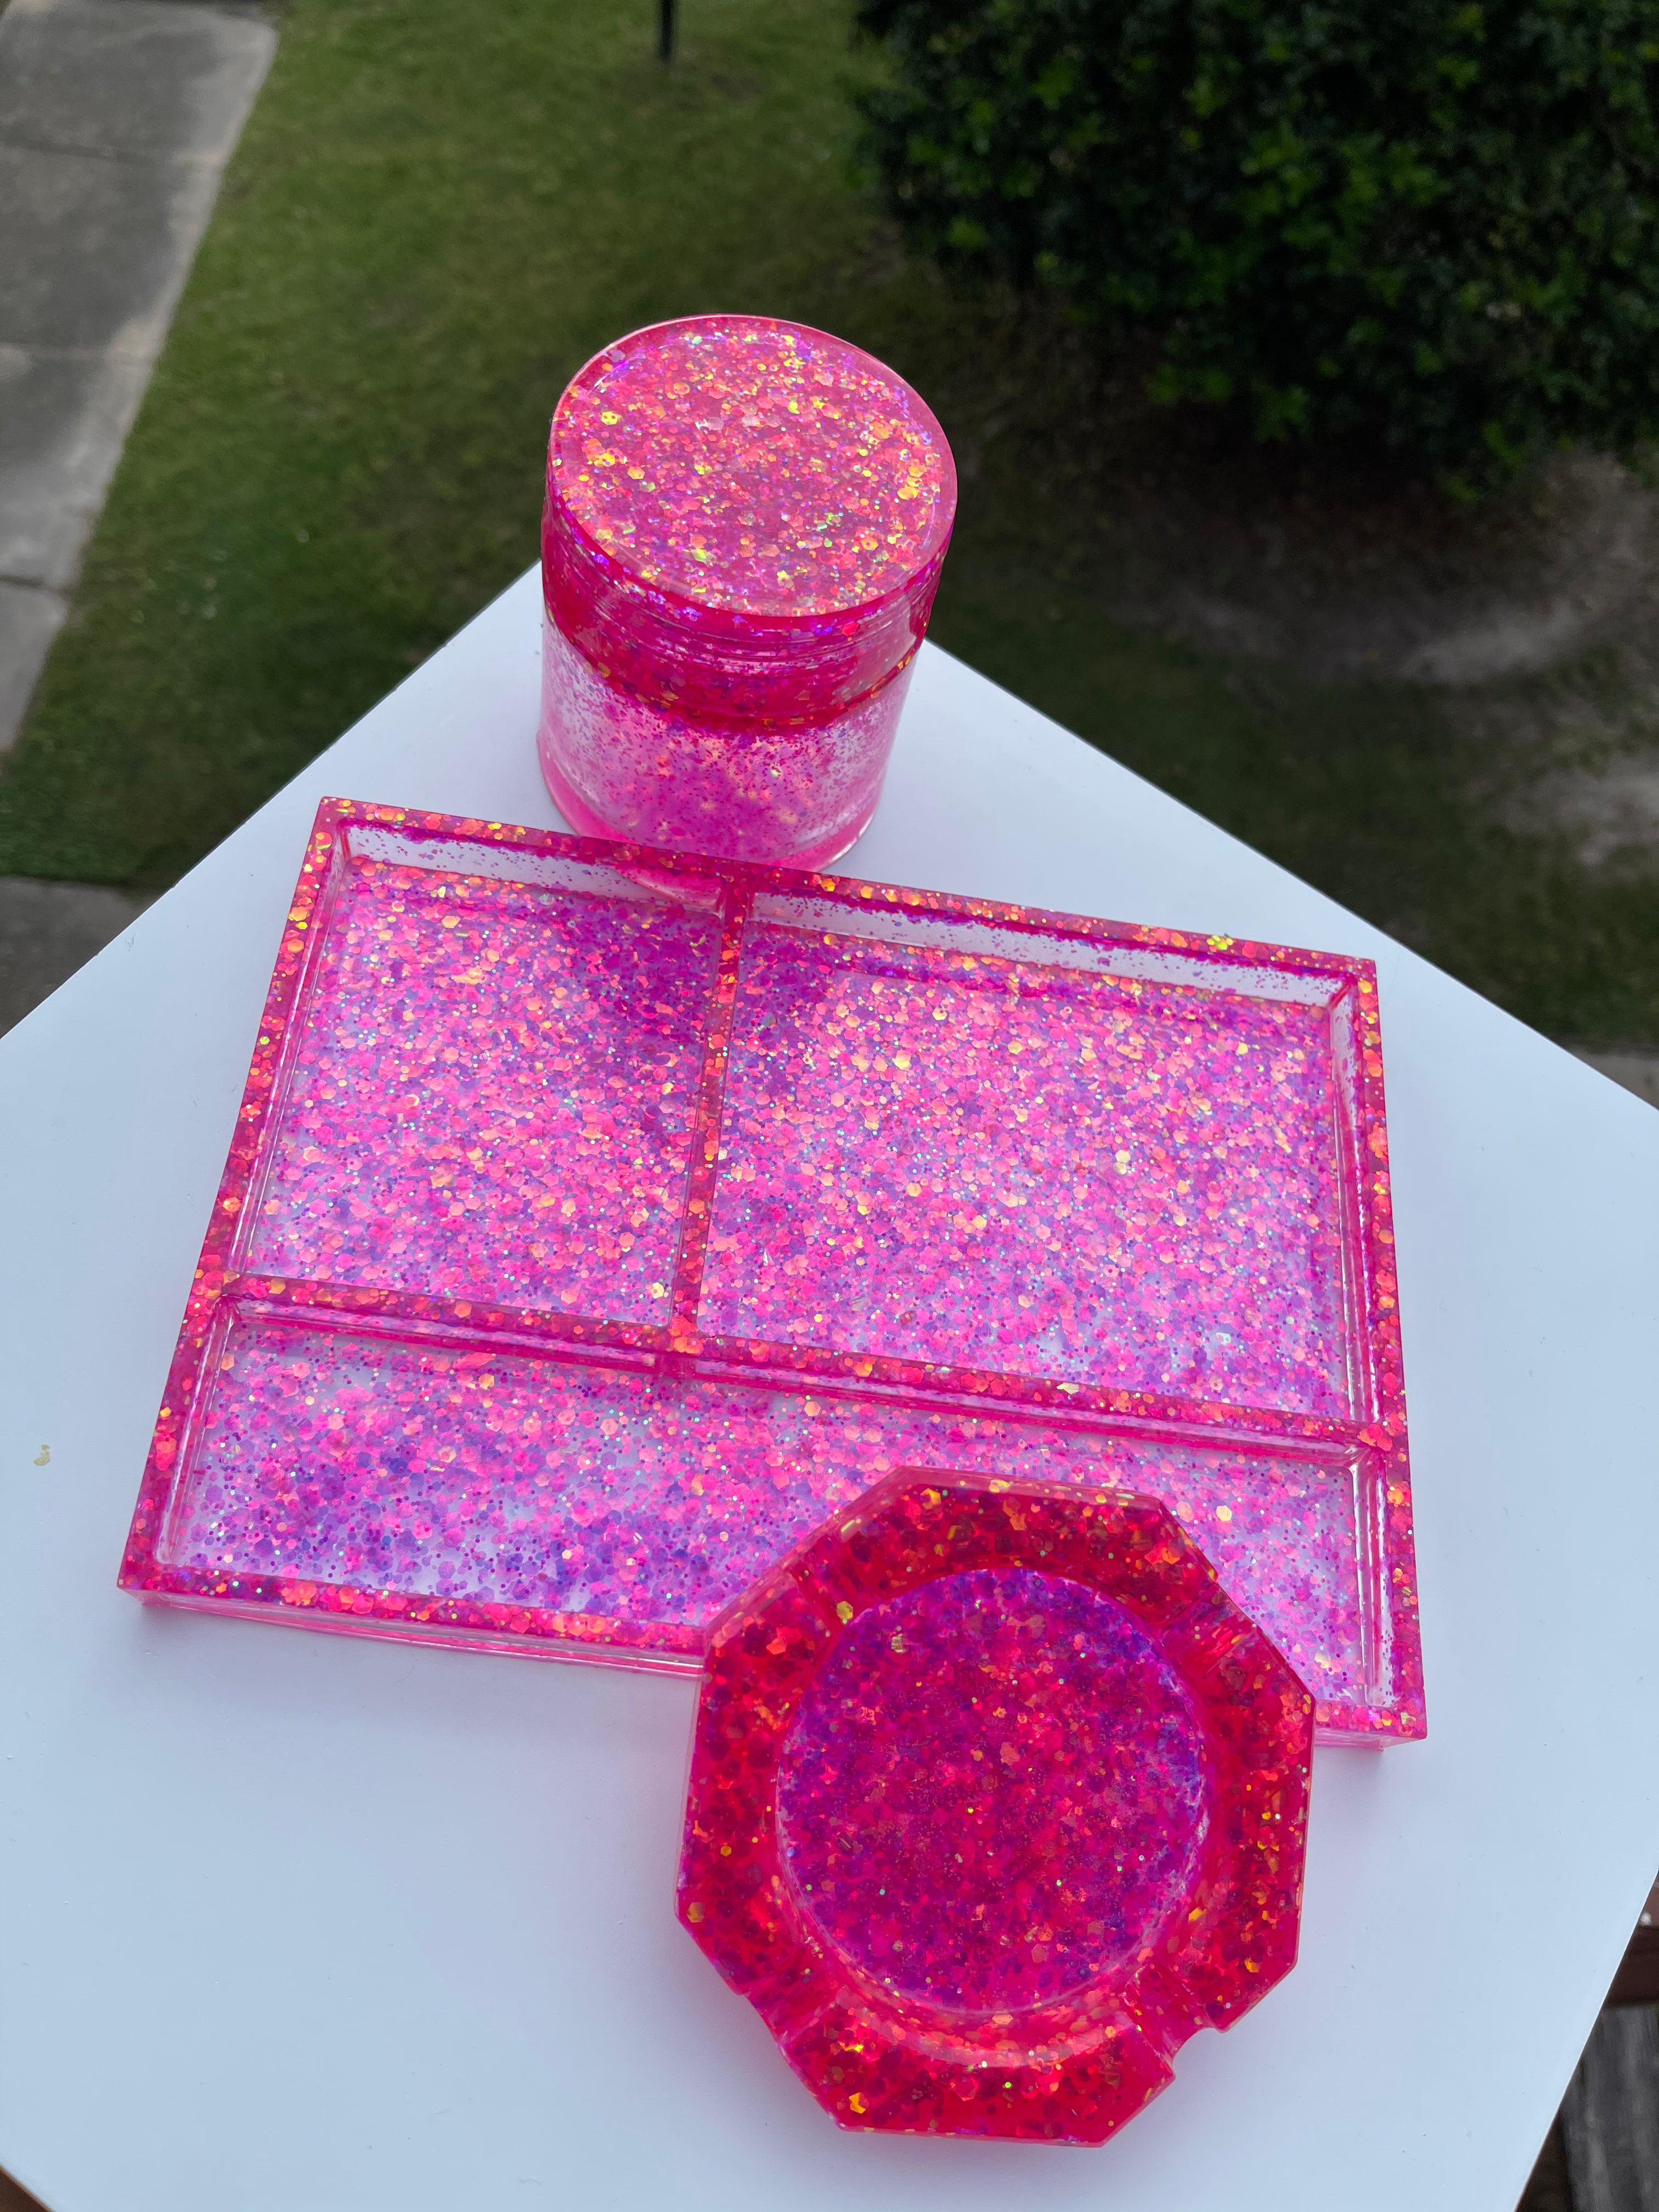 Rolling Tray Set Bundle Kiffer Starter Kit Pink Rosa